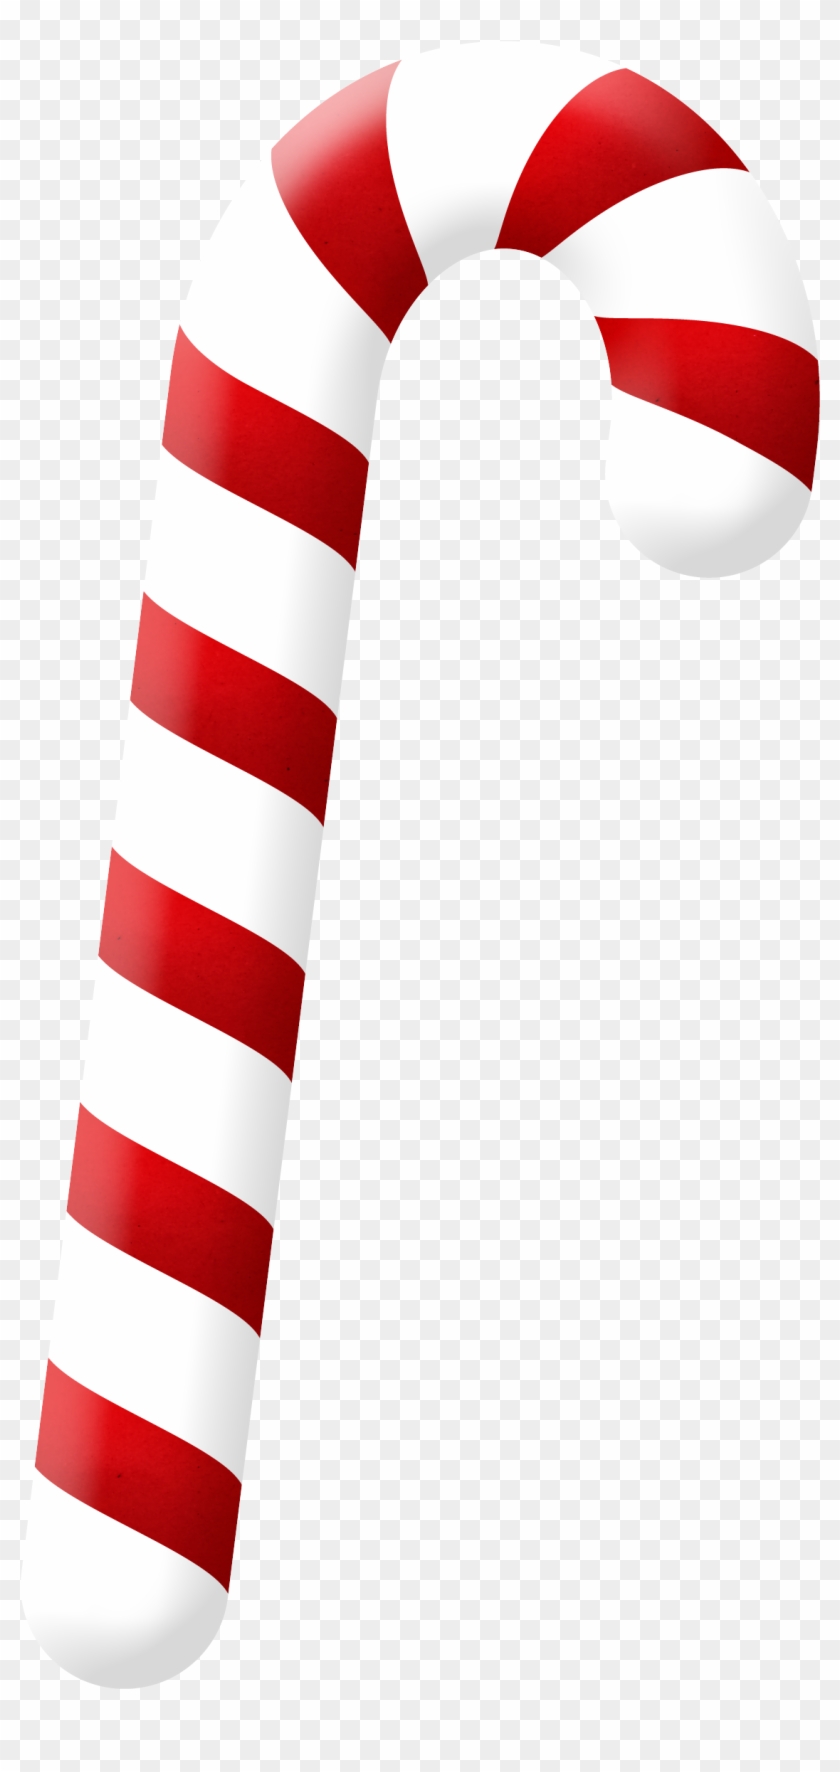 Christmas Candy Cane Clip Art - Christmas Candy Cane #229966